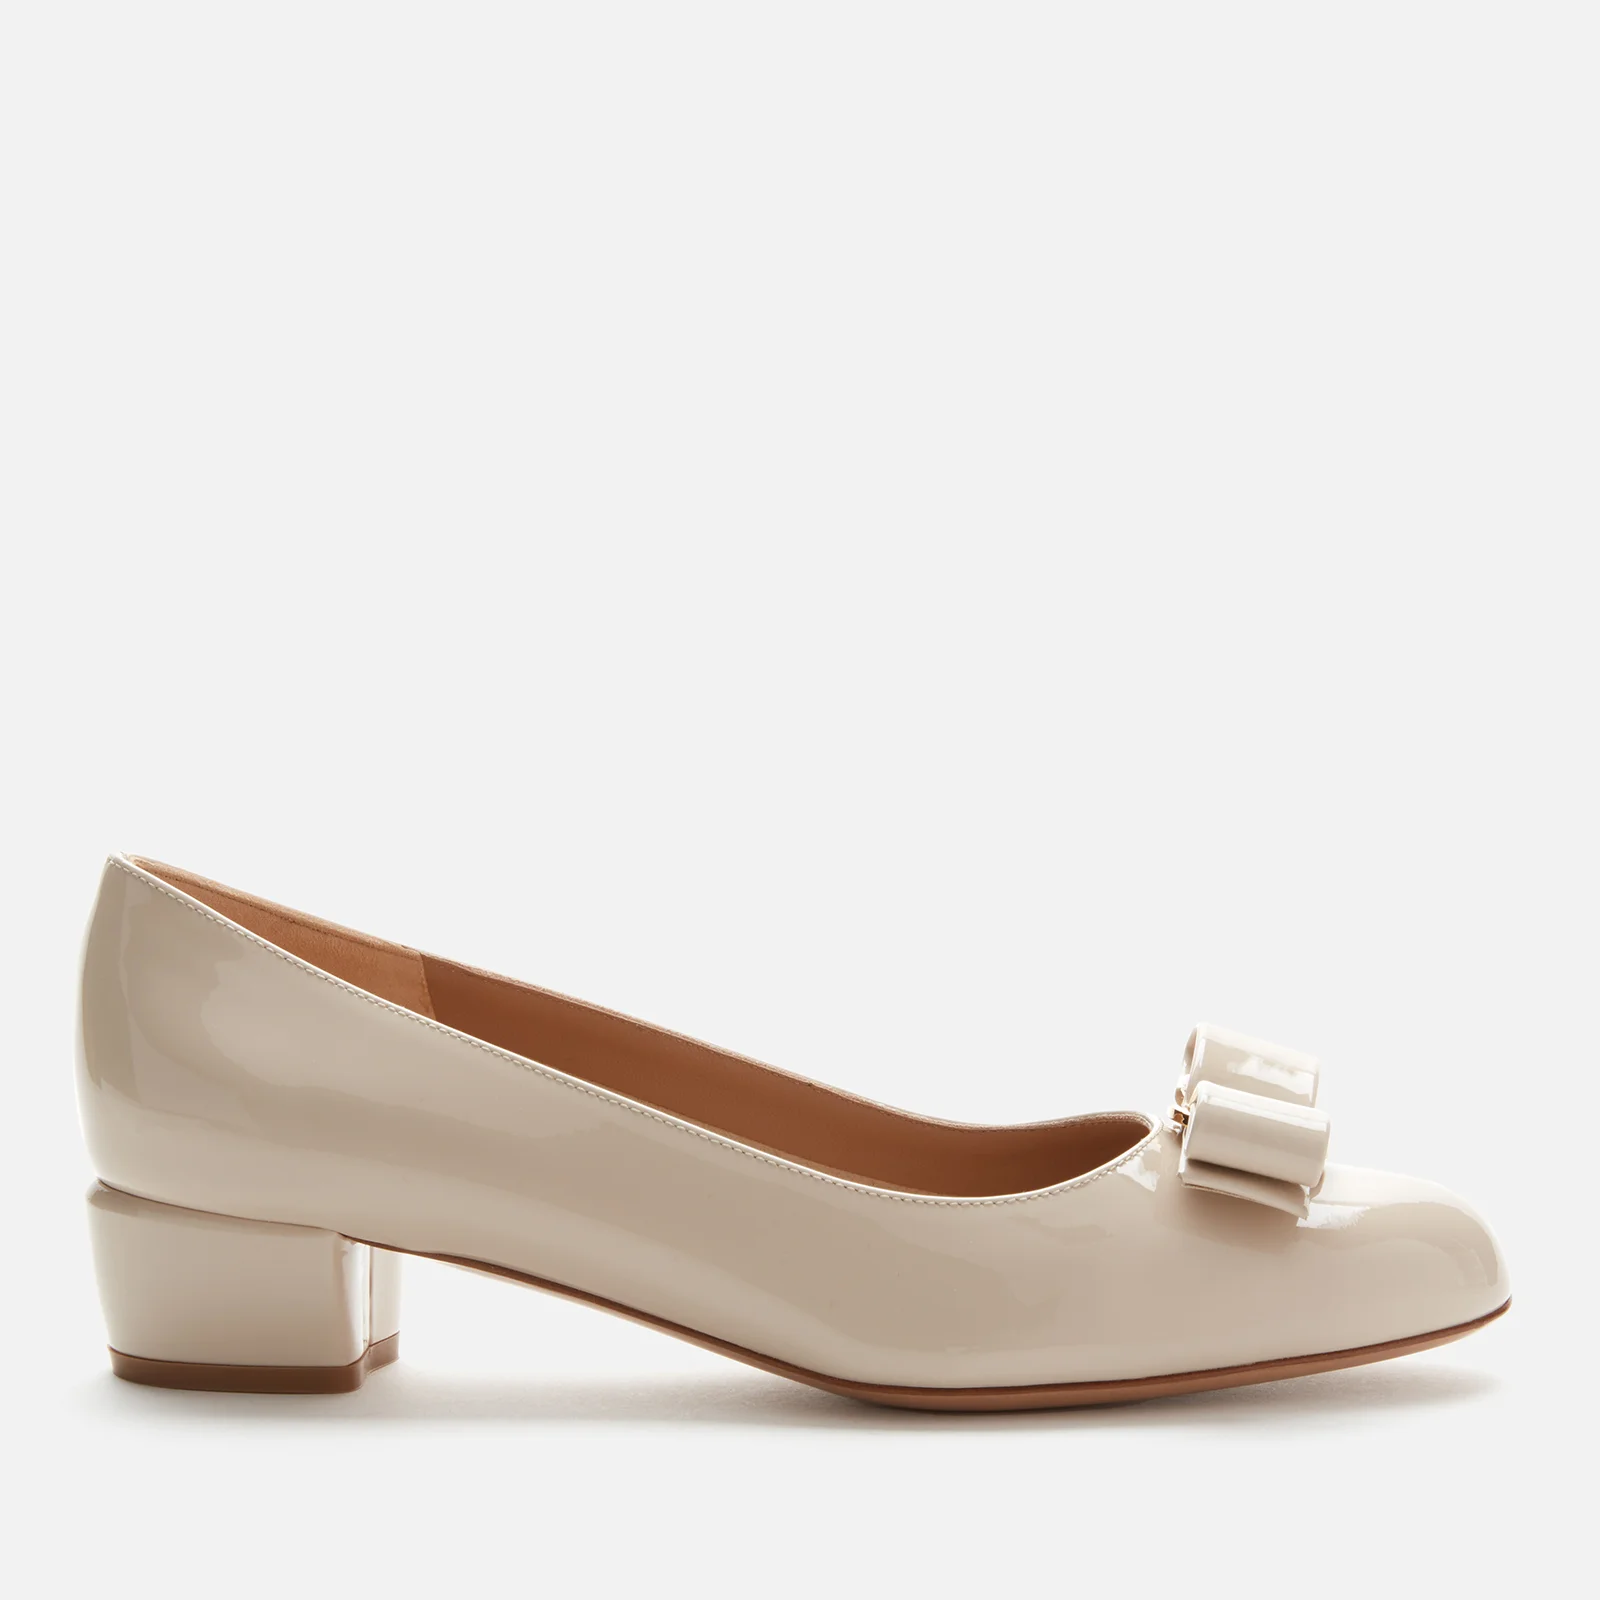 Salvatore Ferragamo Women's Vara 1 Heeled Shoes - White Image 1